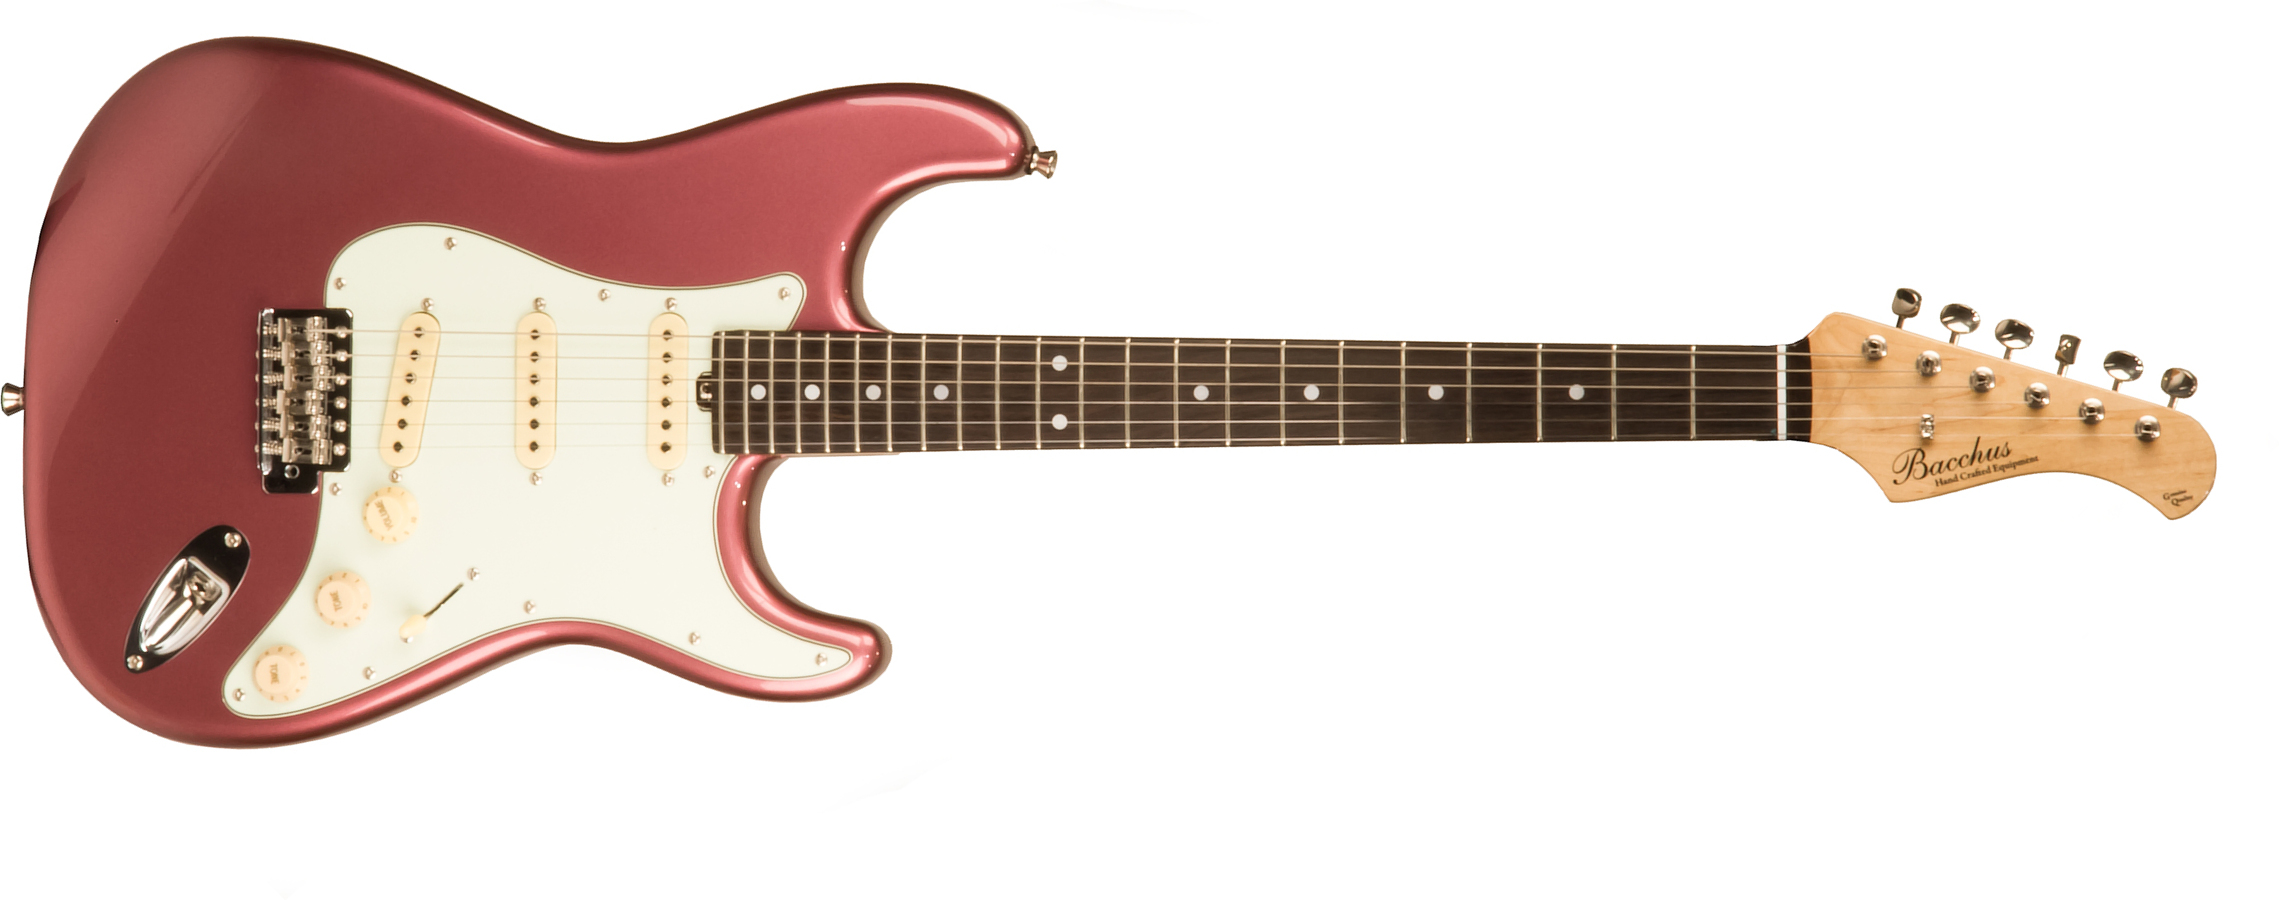 Bacchus Global Bst 650b - Burgundy Mist - Str shape electric guitar - Main picture